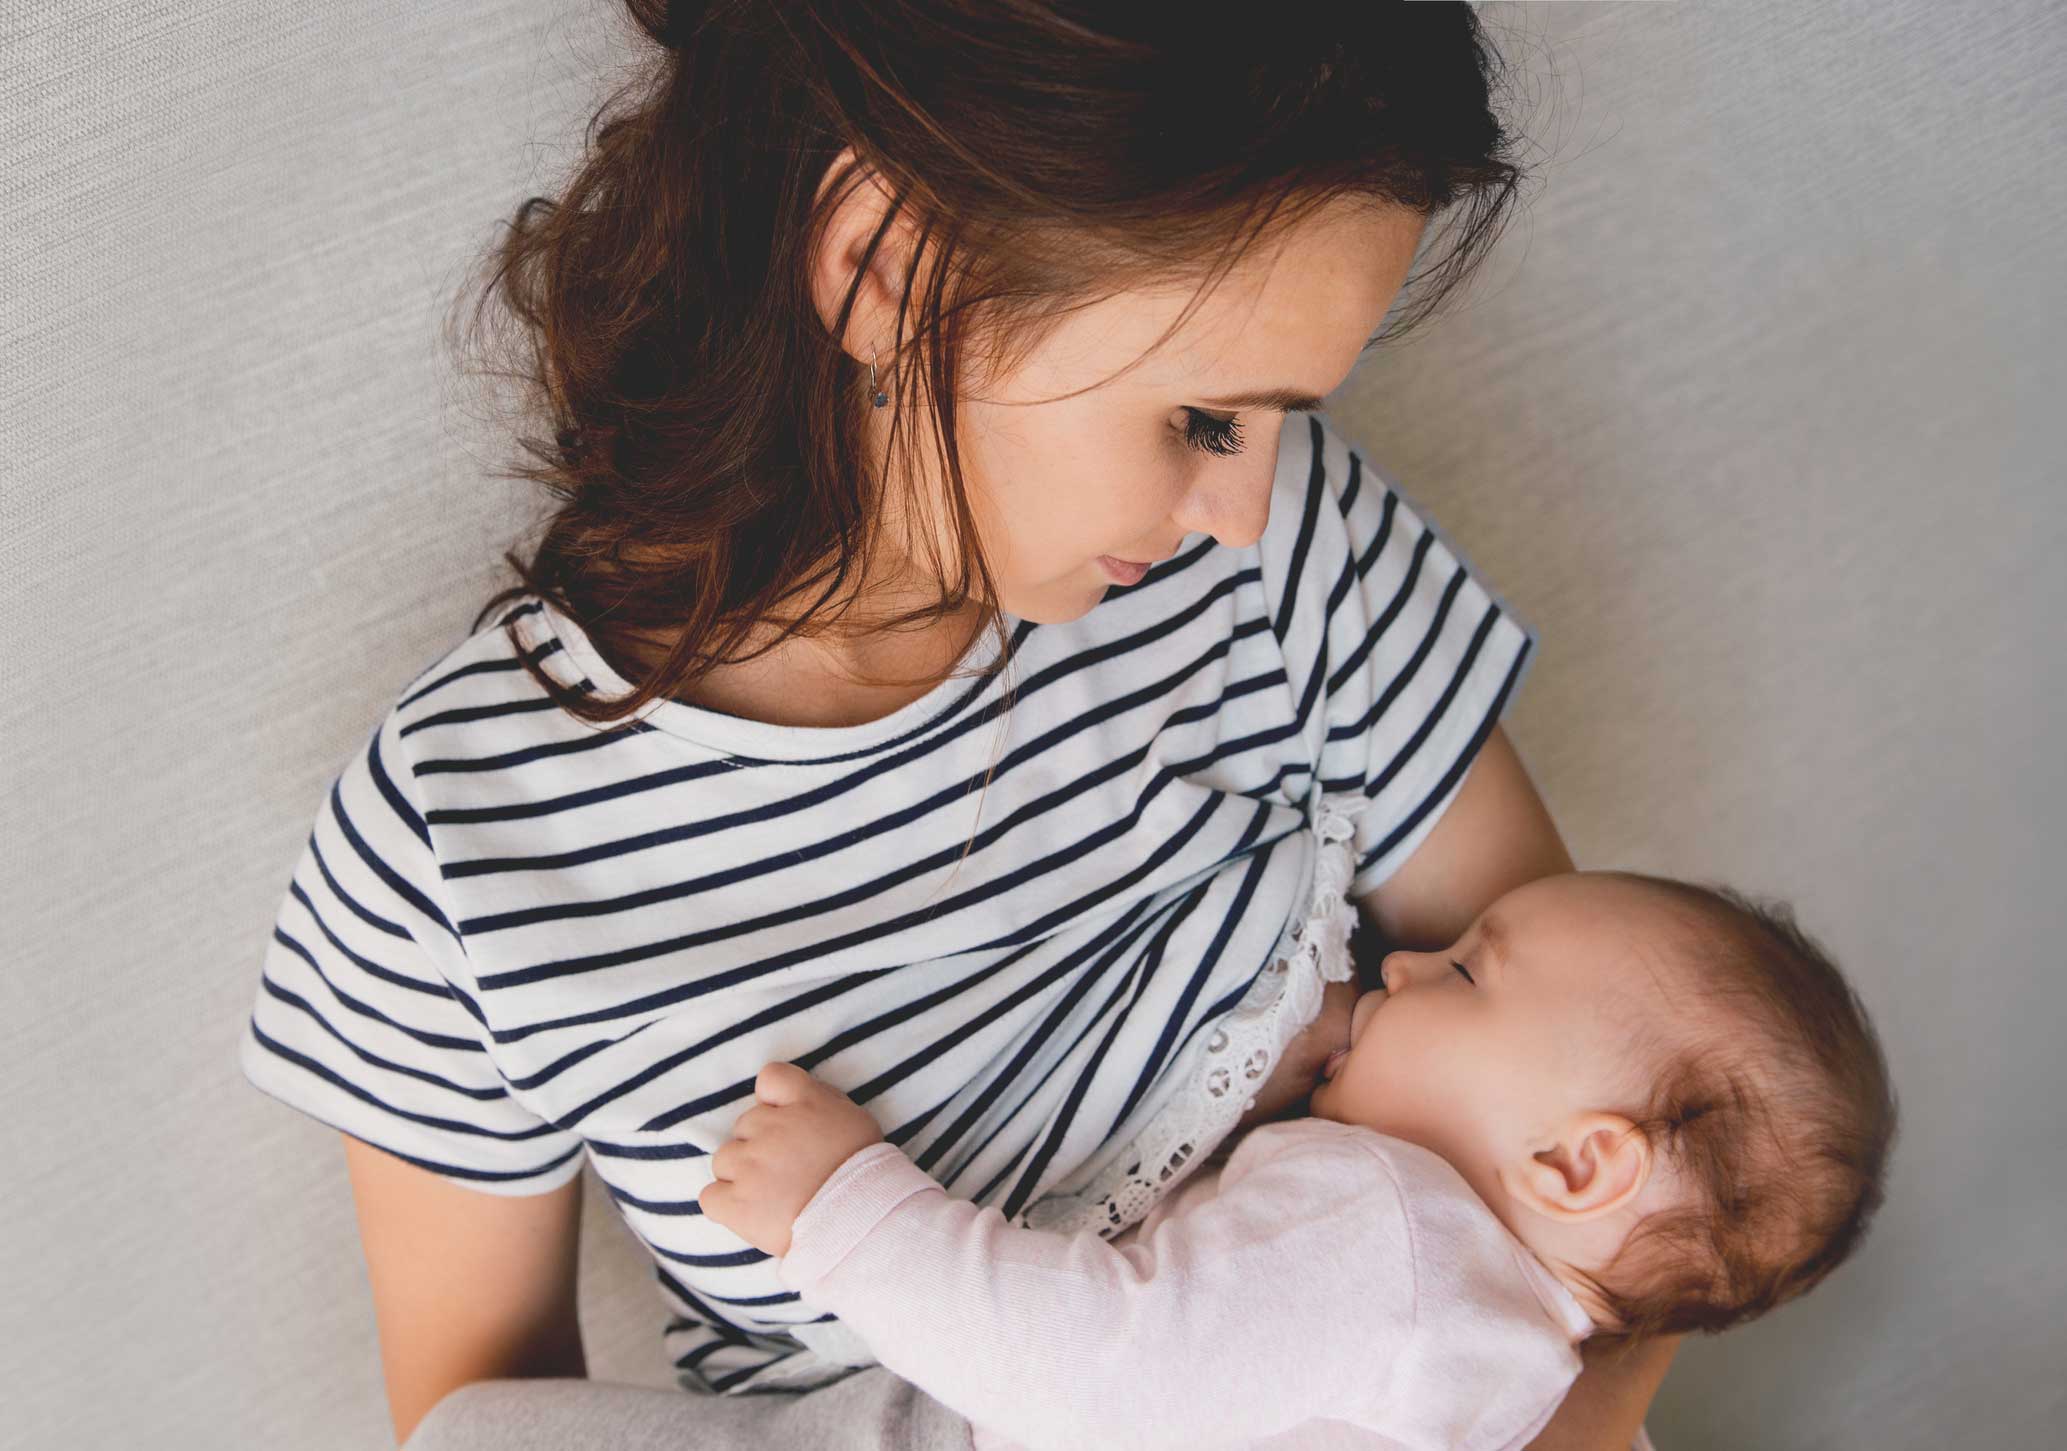 7 Common Breastfeeding Positions